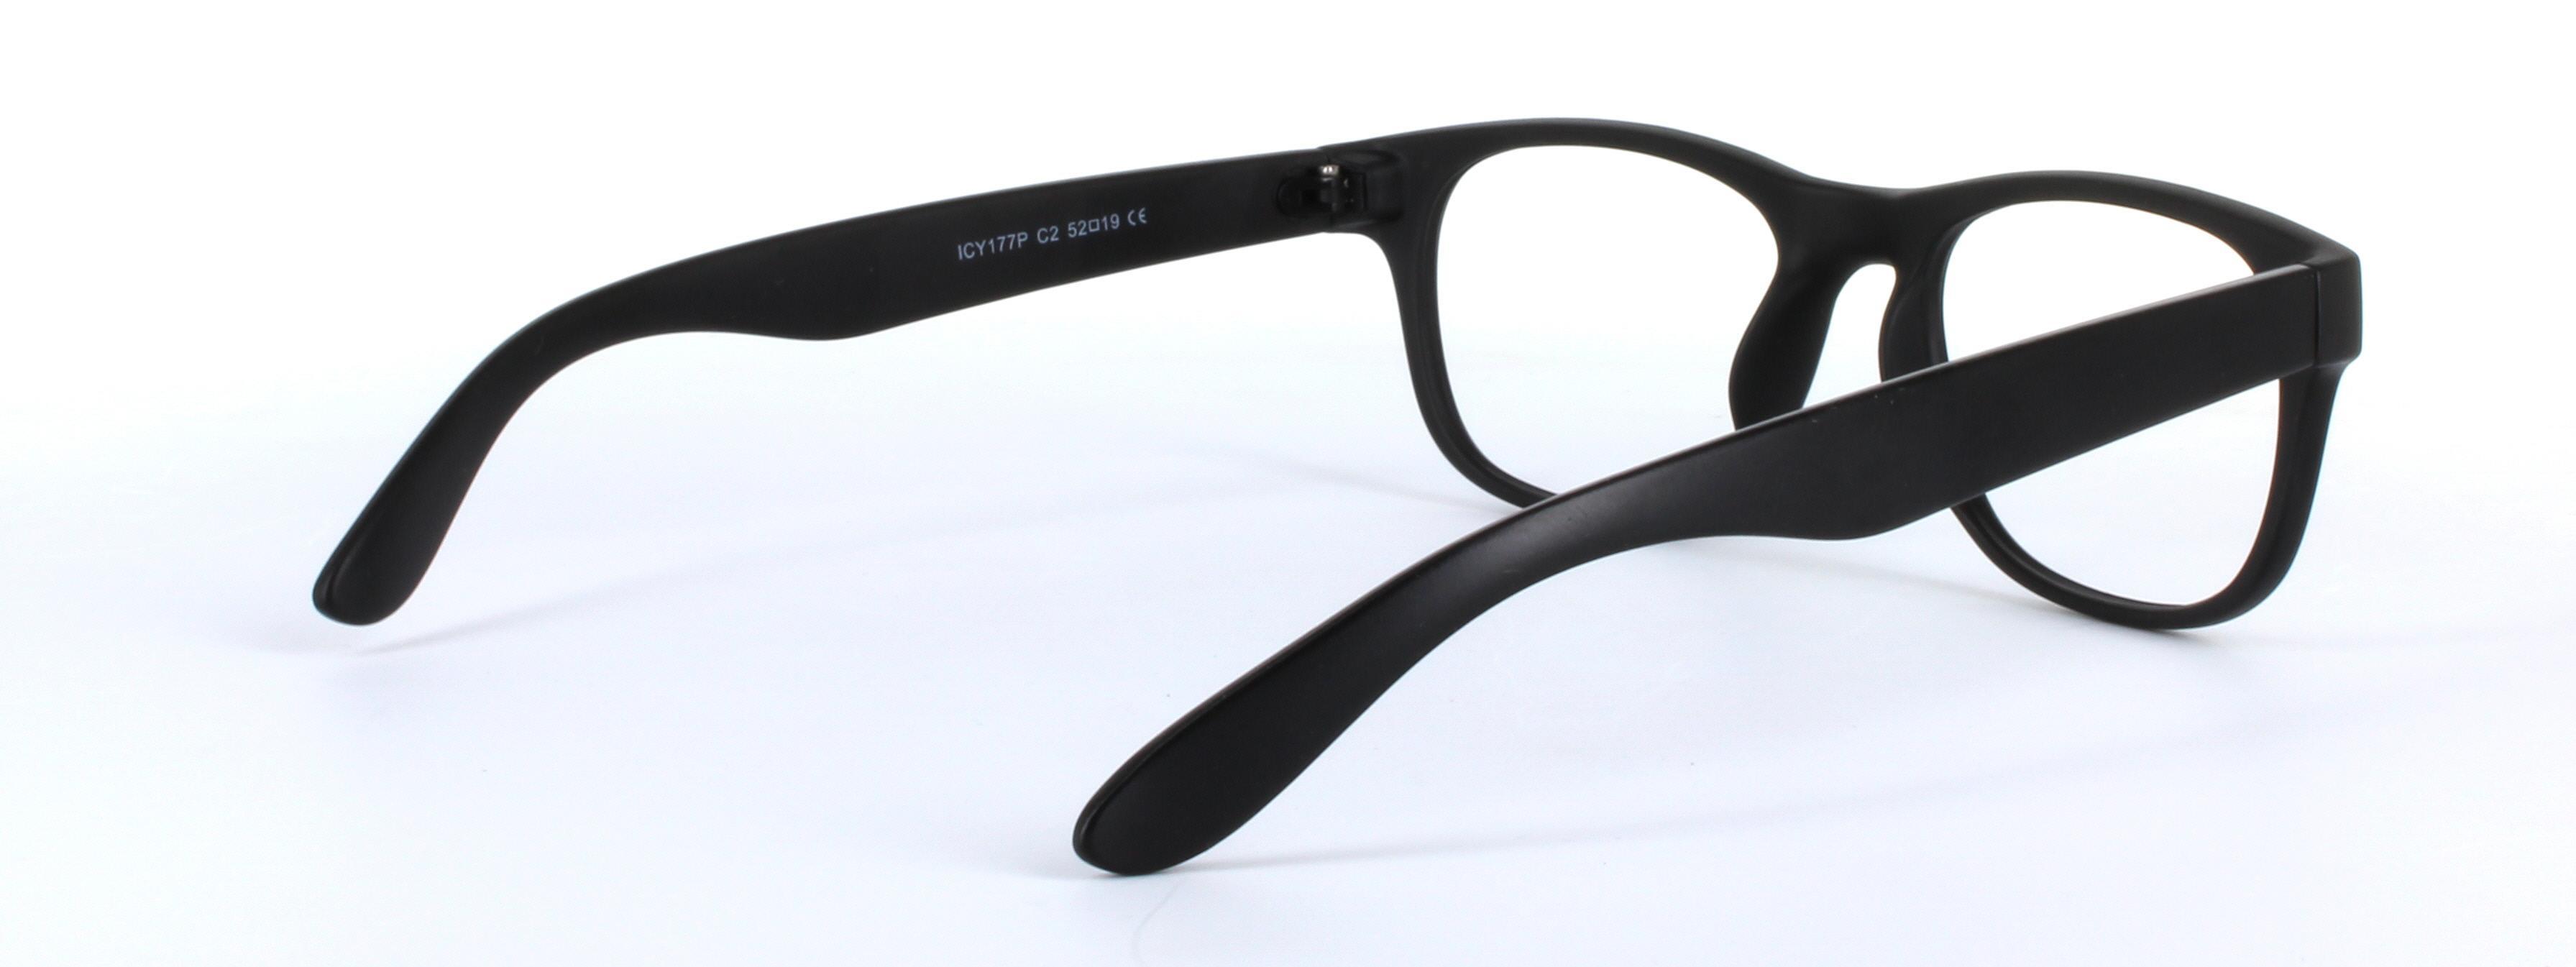 Brazil Black Full Rim Oval Plastic Glasses - Image View 4